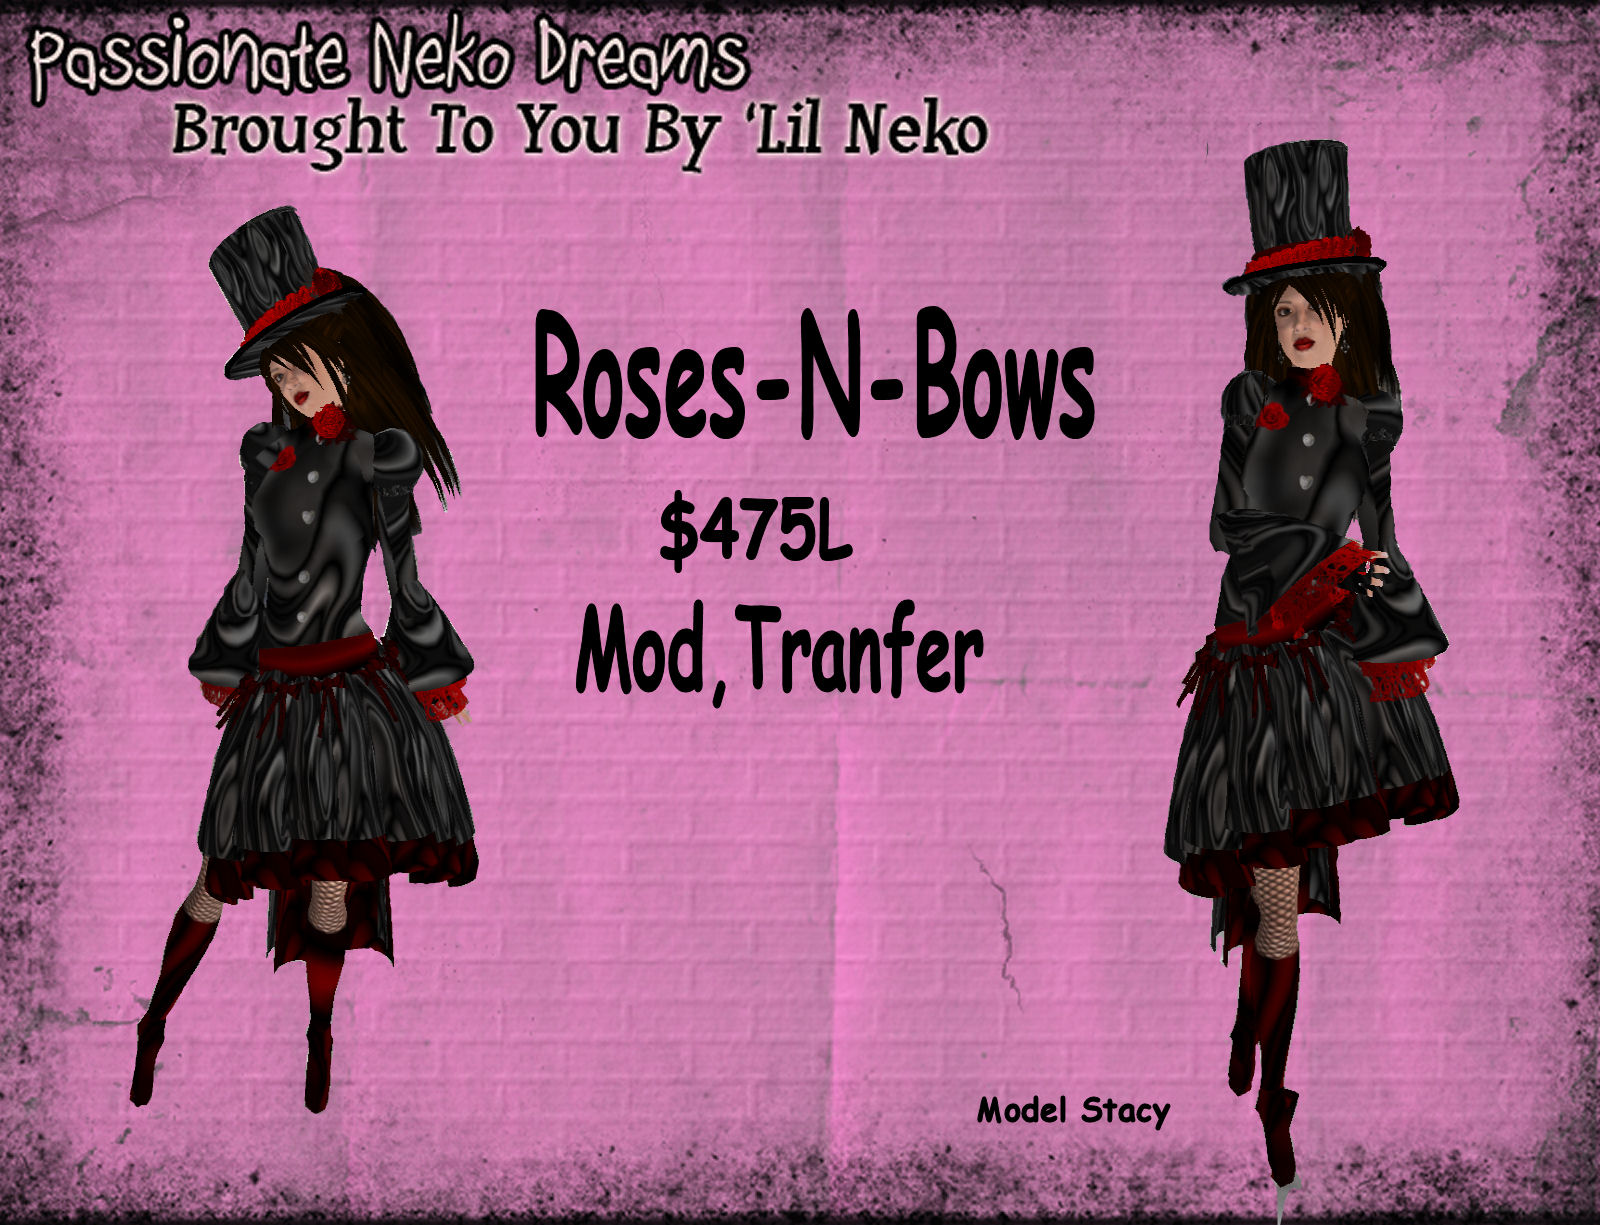 [Roses+n+Bows+ad.jpg]